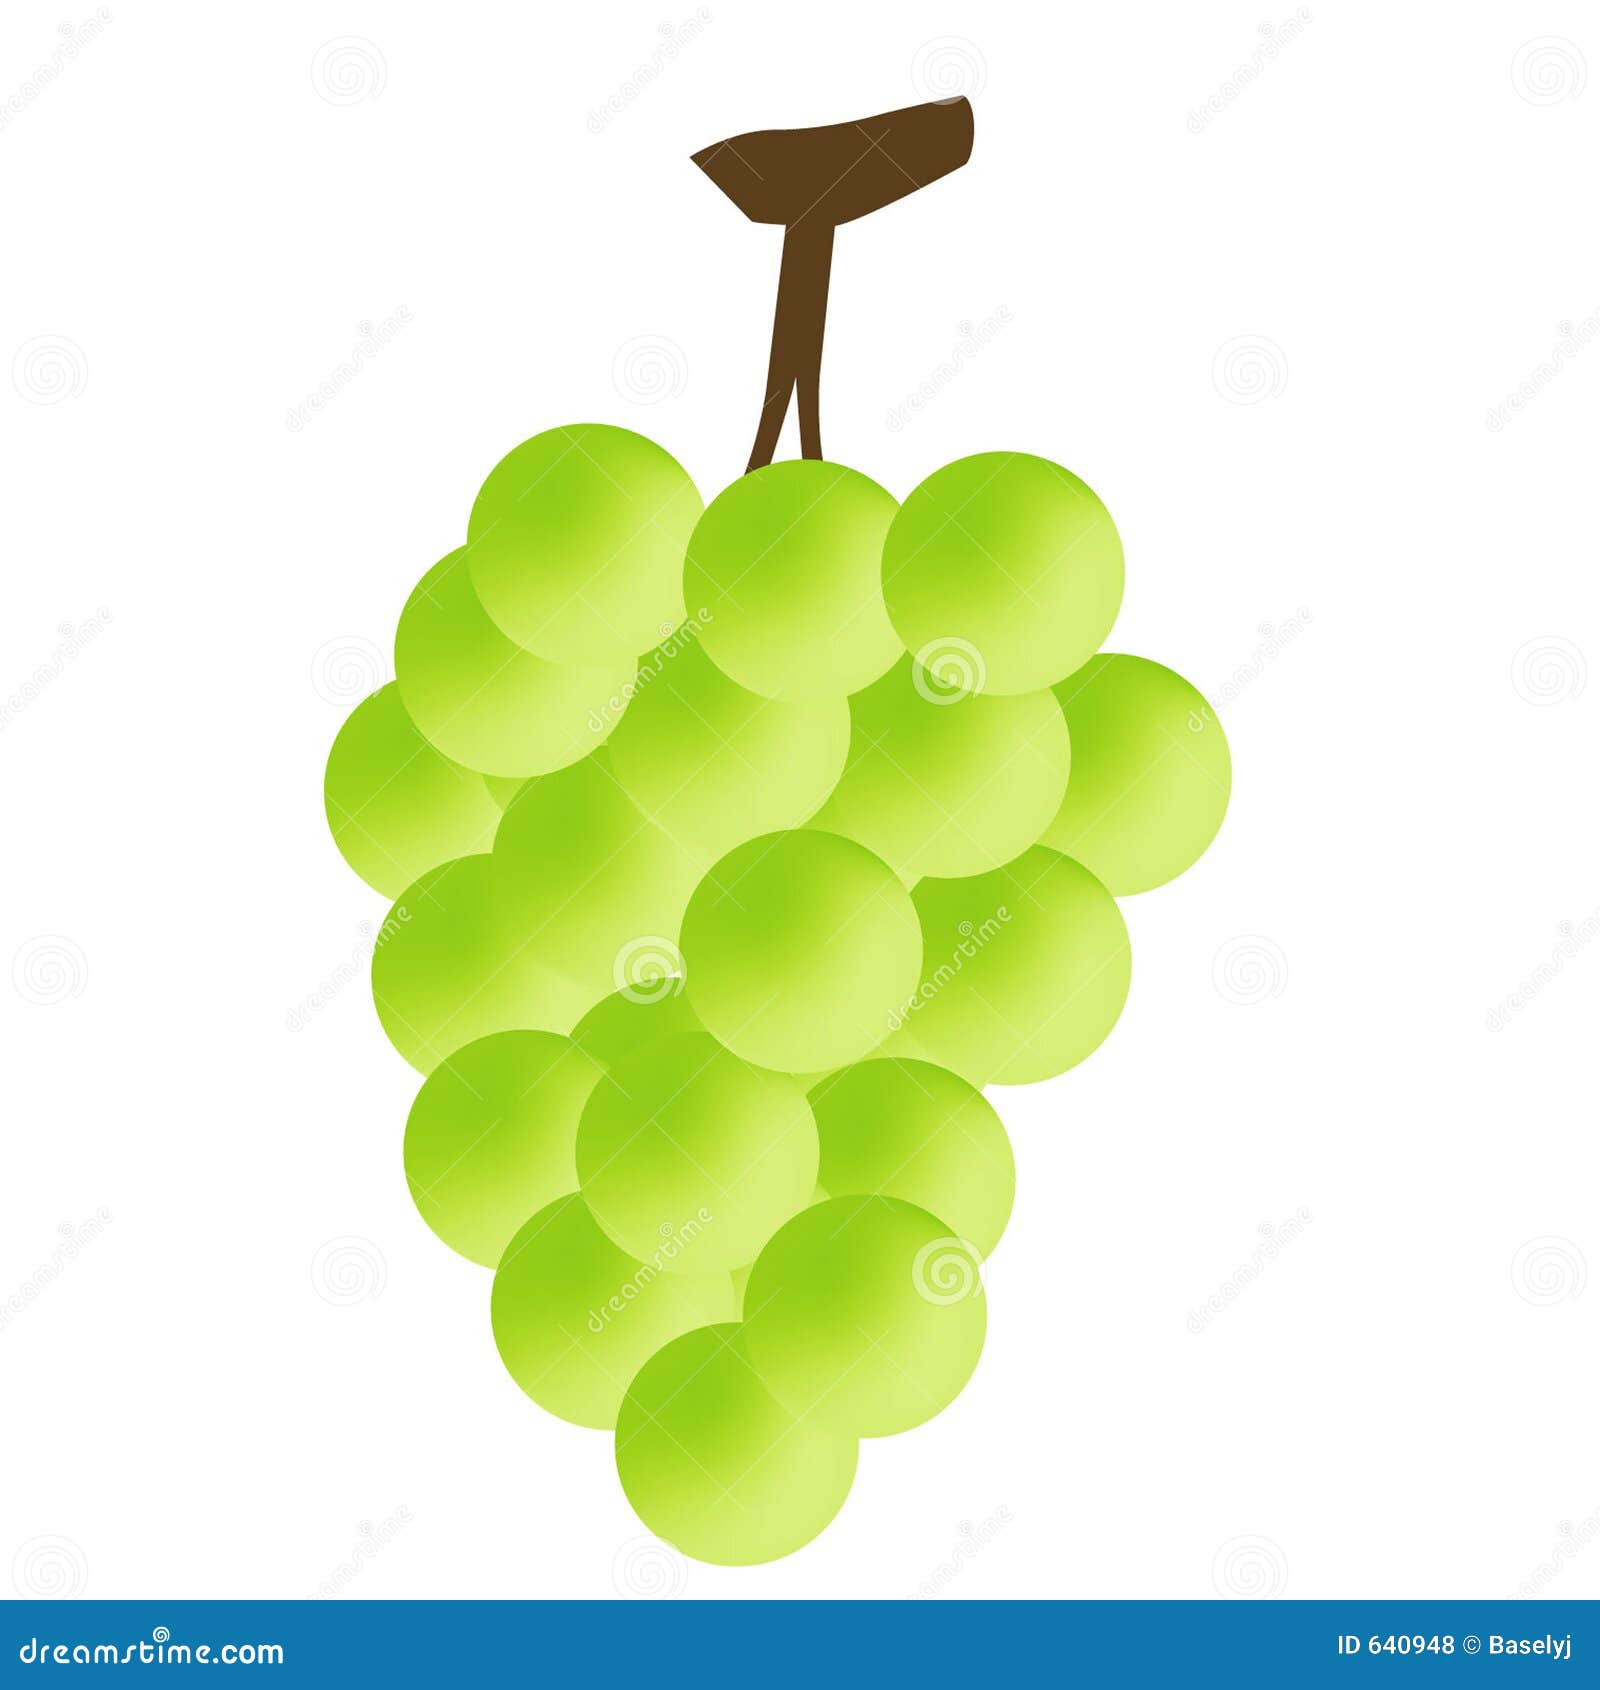 grapes business plan